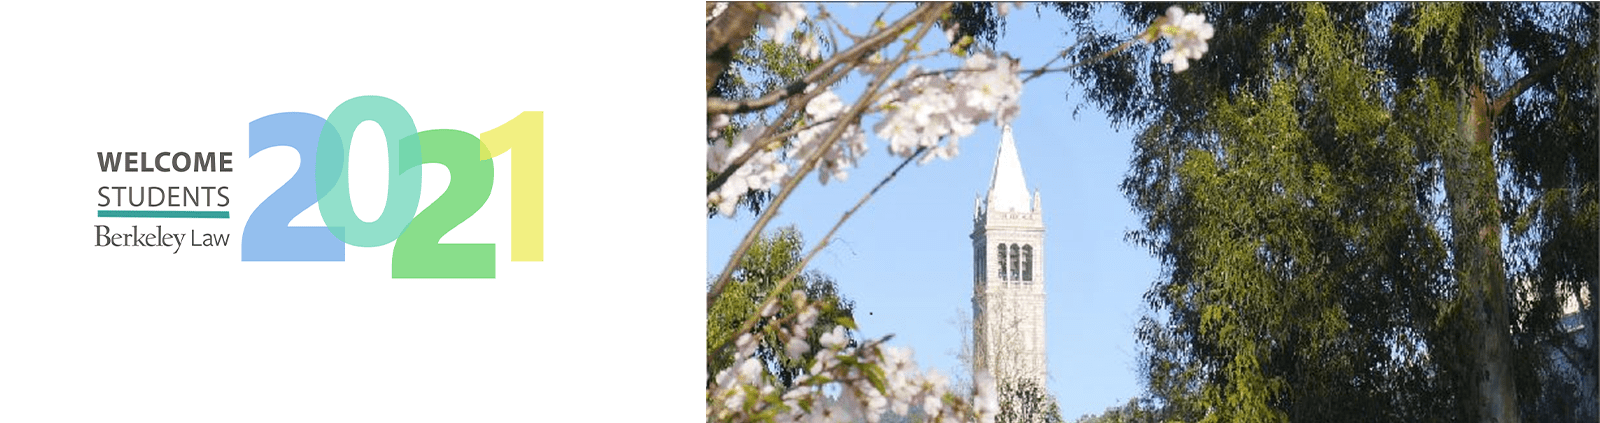 Welcome Students Berkeley Law 2021